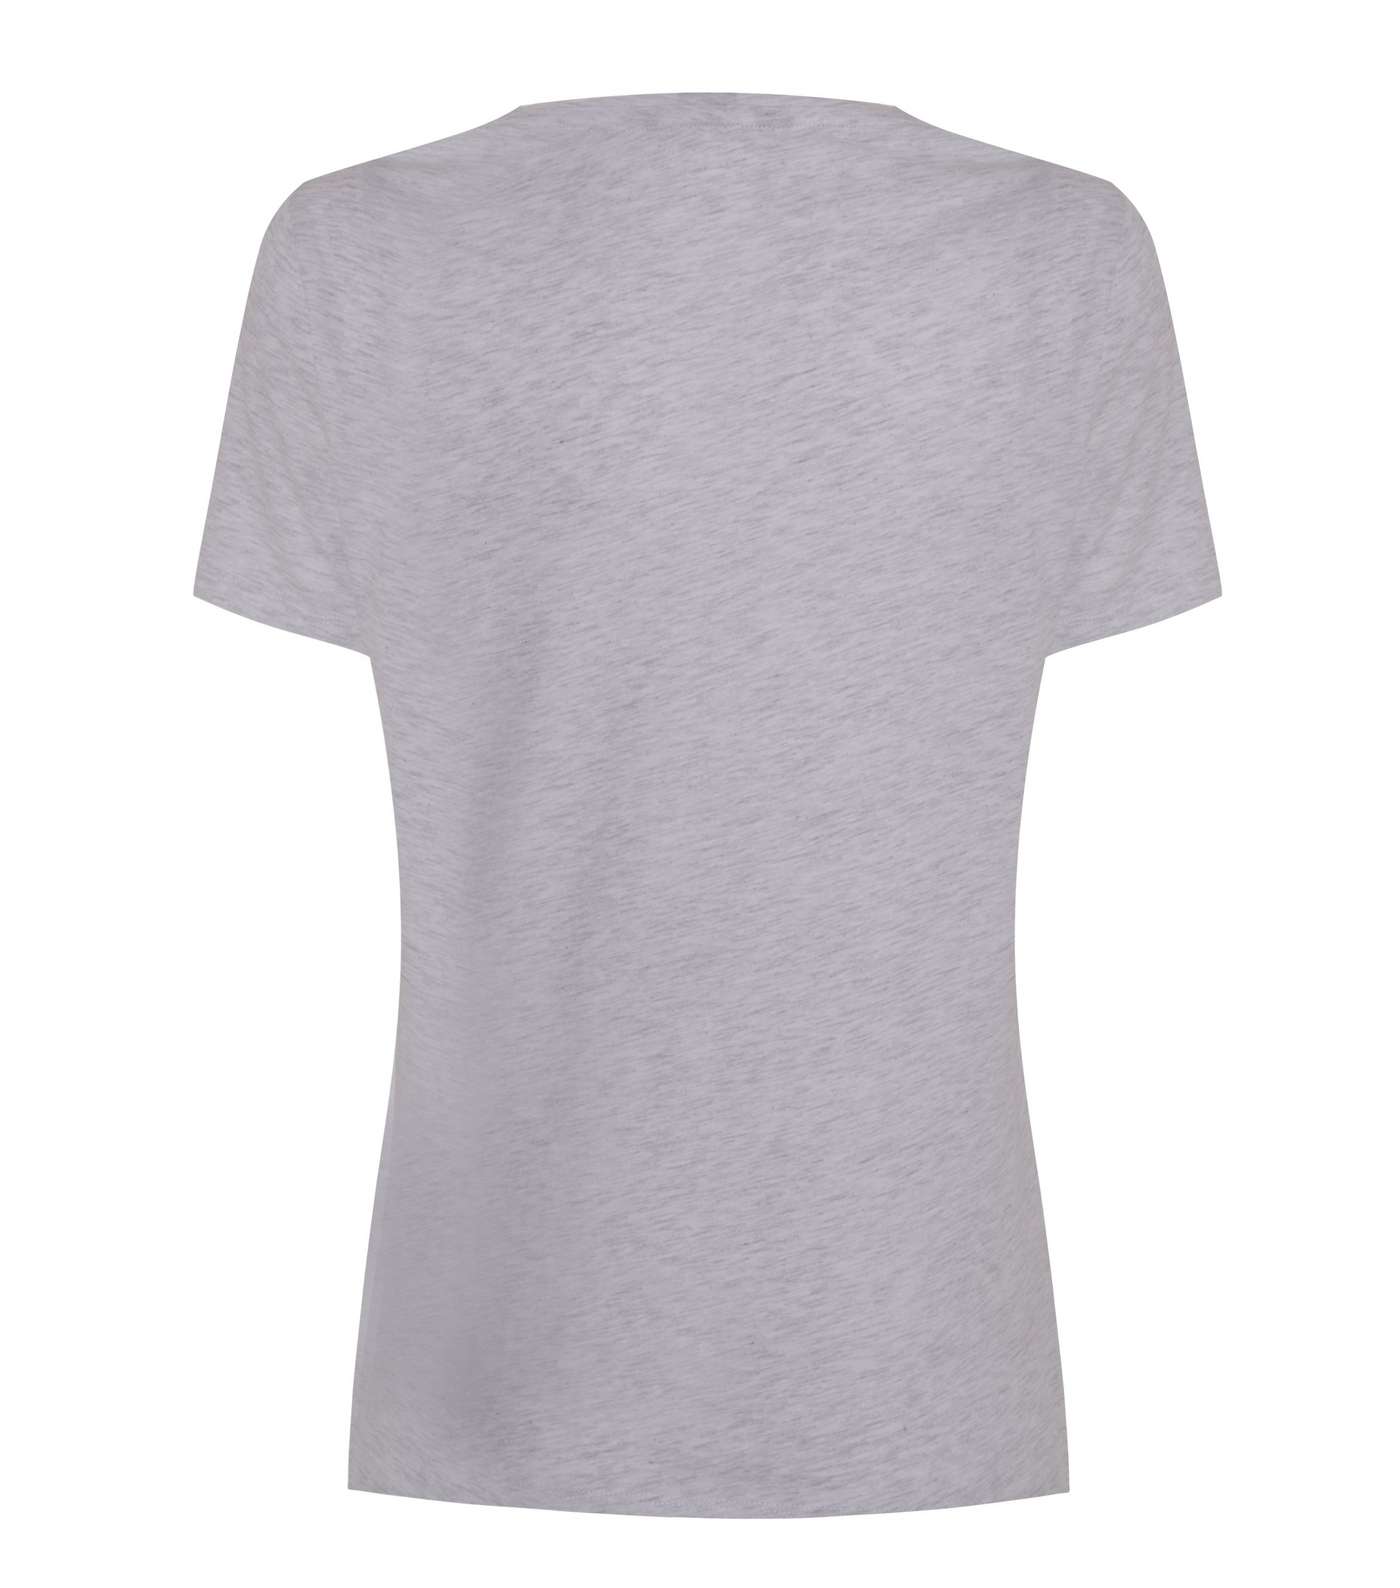 Pale Grey Short Sleeve Crew T-Shirt Image 2